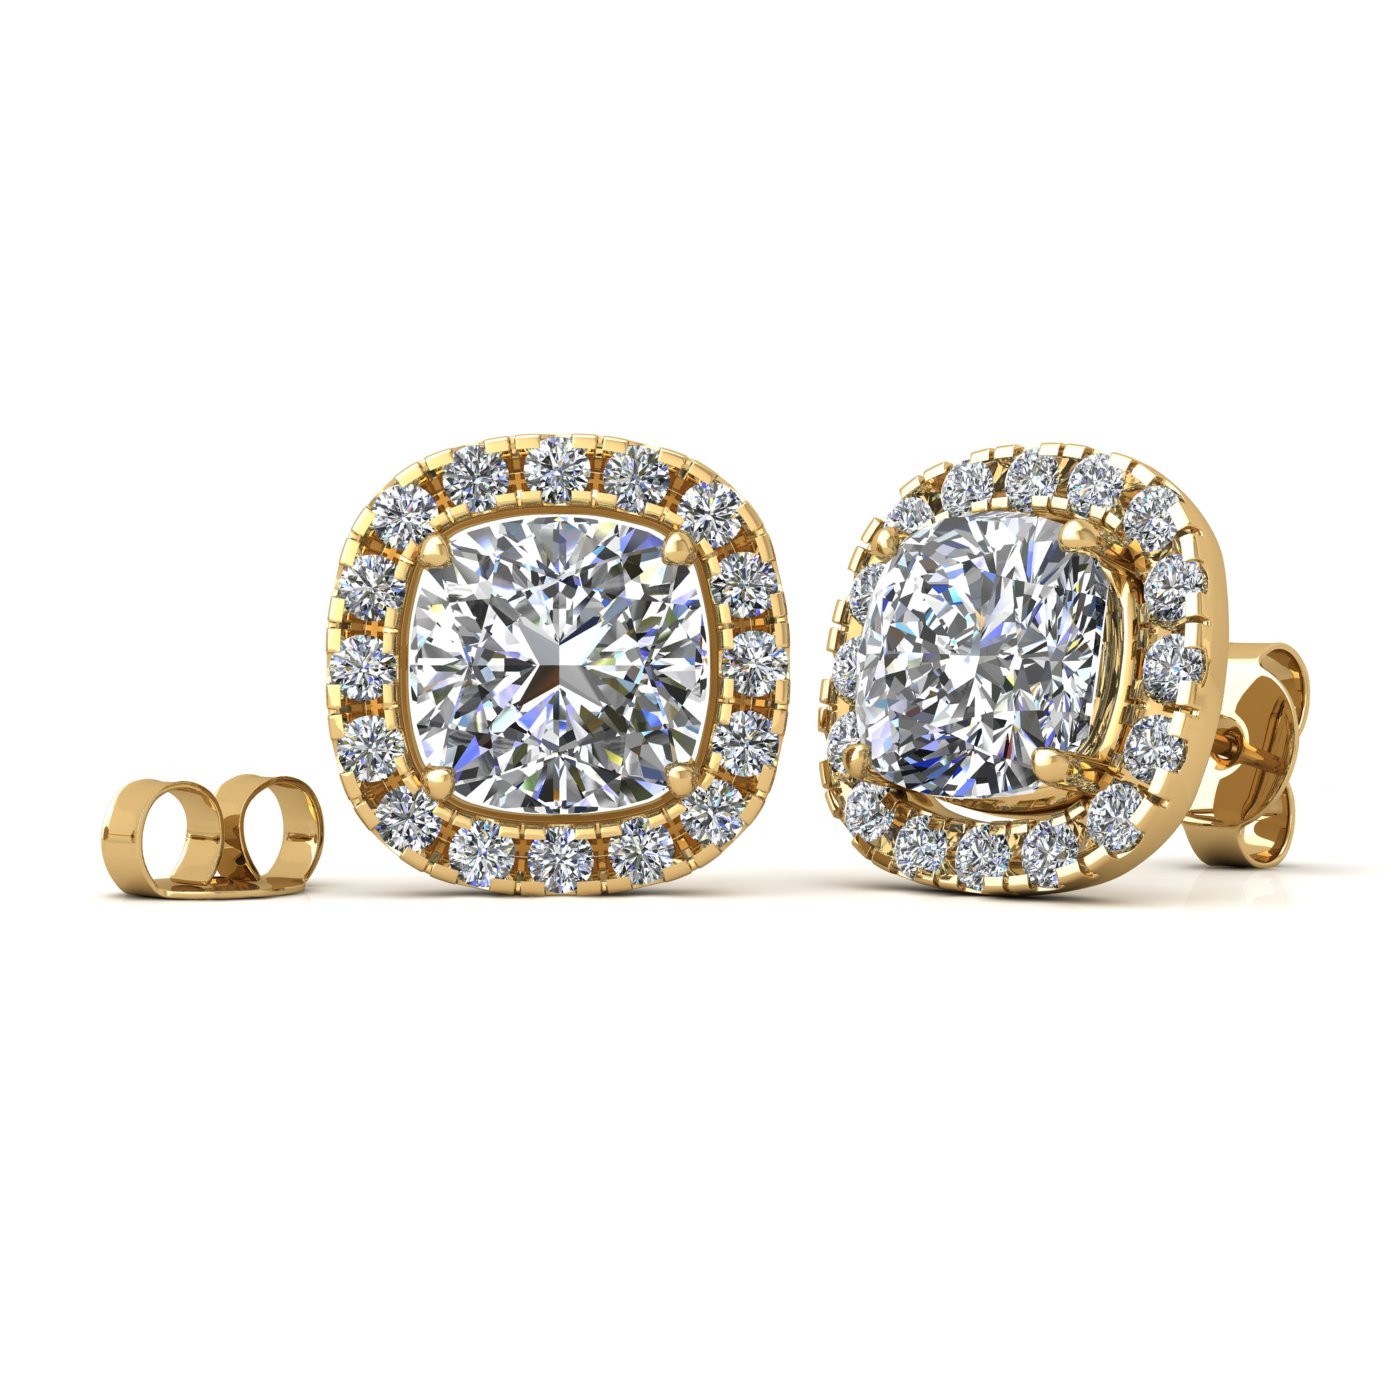 18k yellow gold  2,5 ct each (5,0 tcw) 4 prongs cushion shape diamond earrings with diamond pavÉ set halo Photos & images